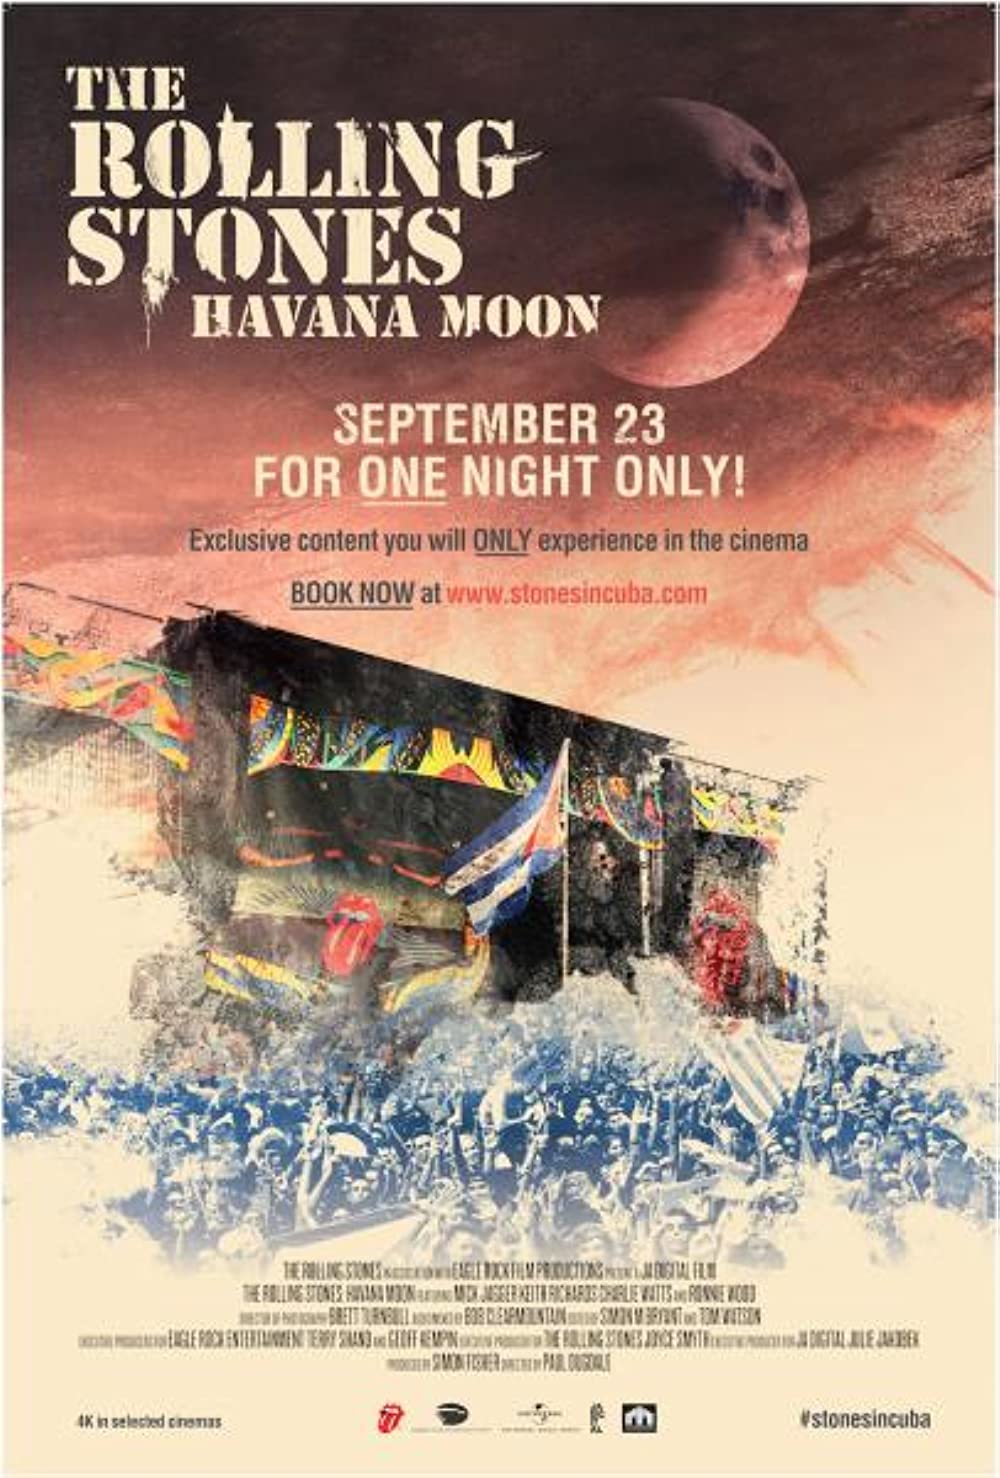 Filmbeschreibung zu The Rolling Stones - Havana Moon